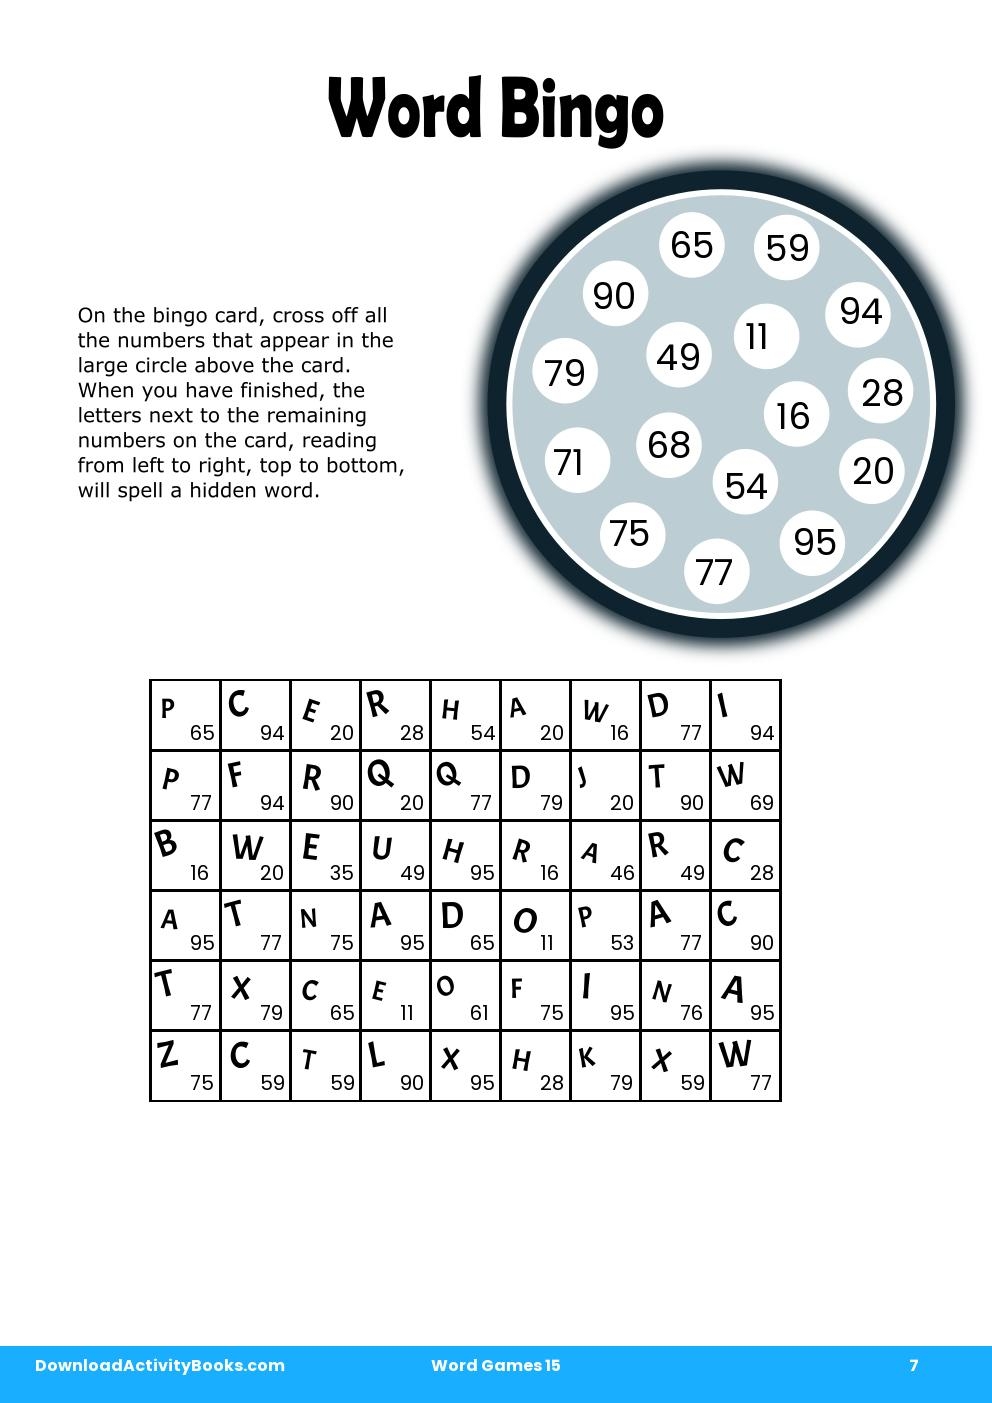 Word Bingo in Word Games 15